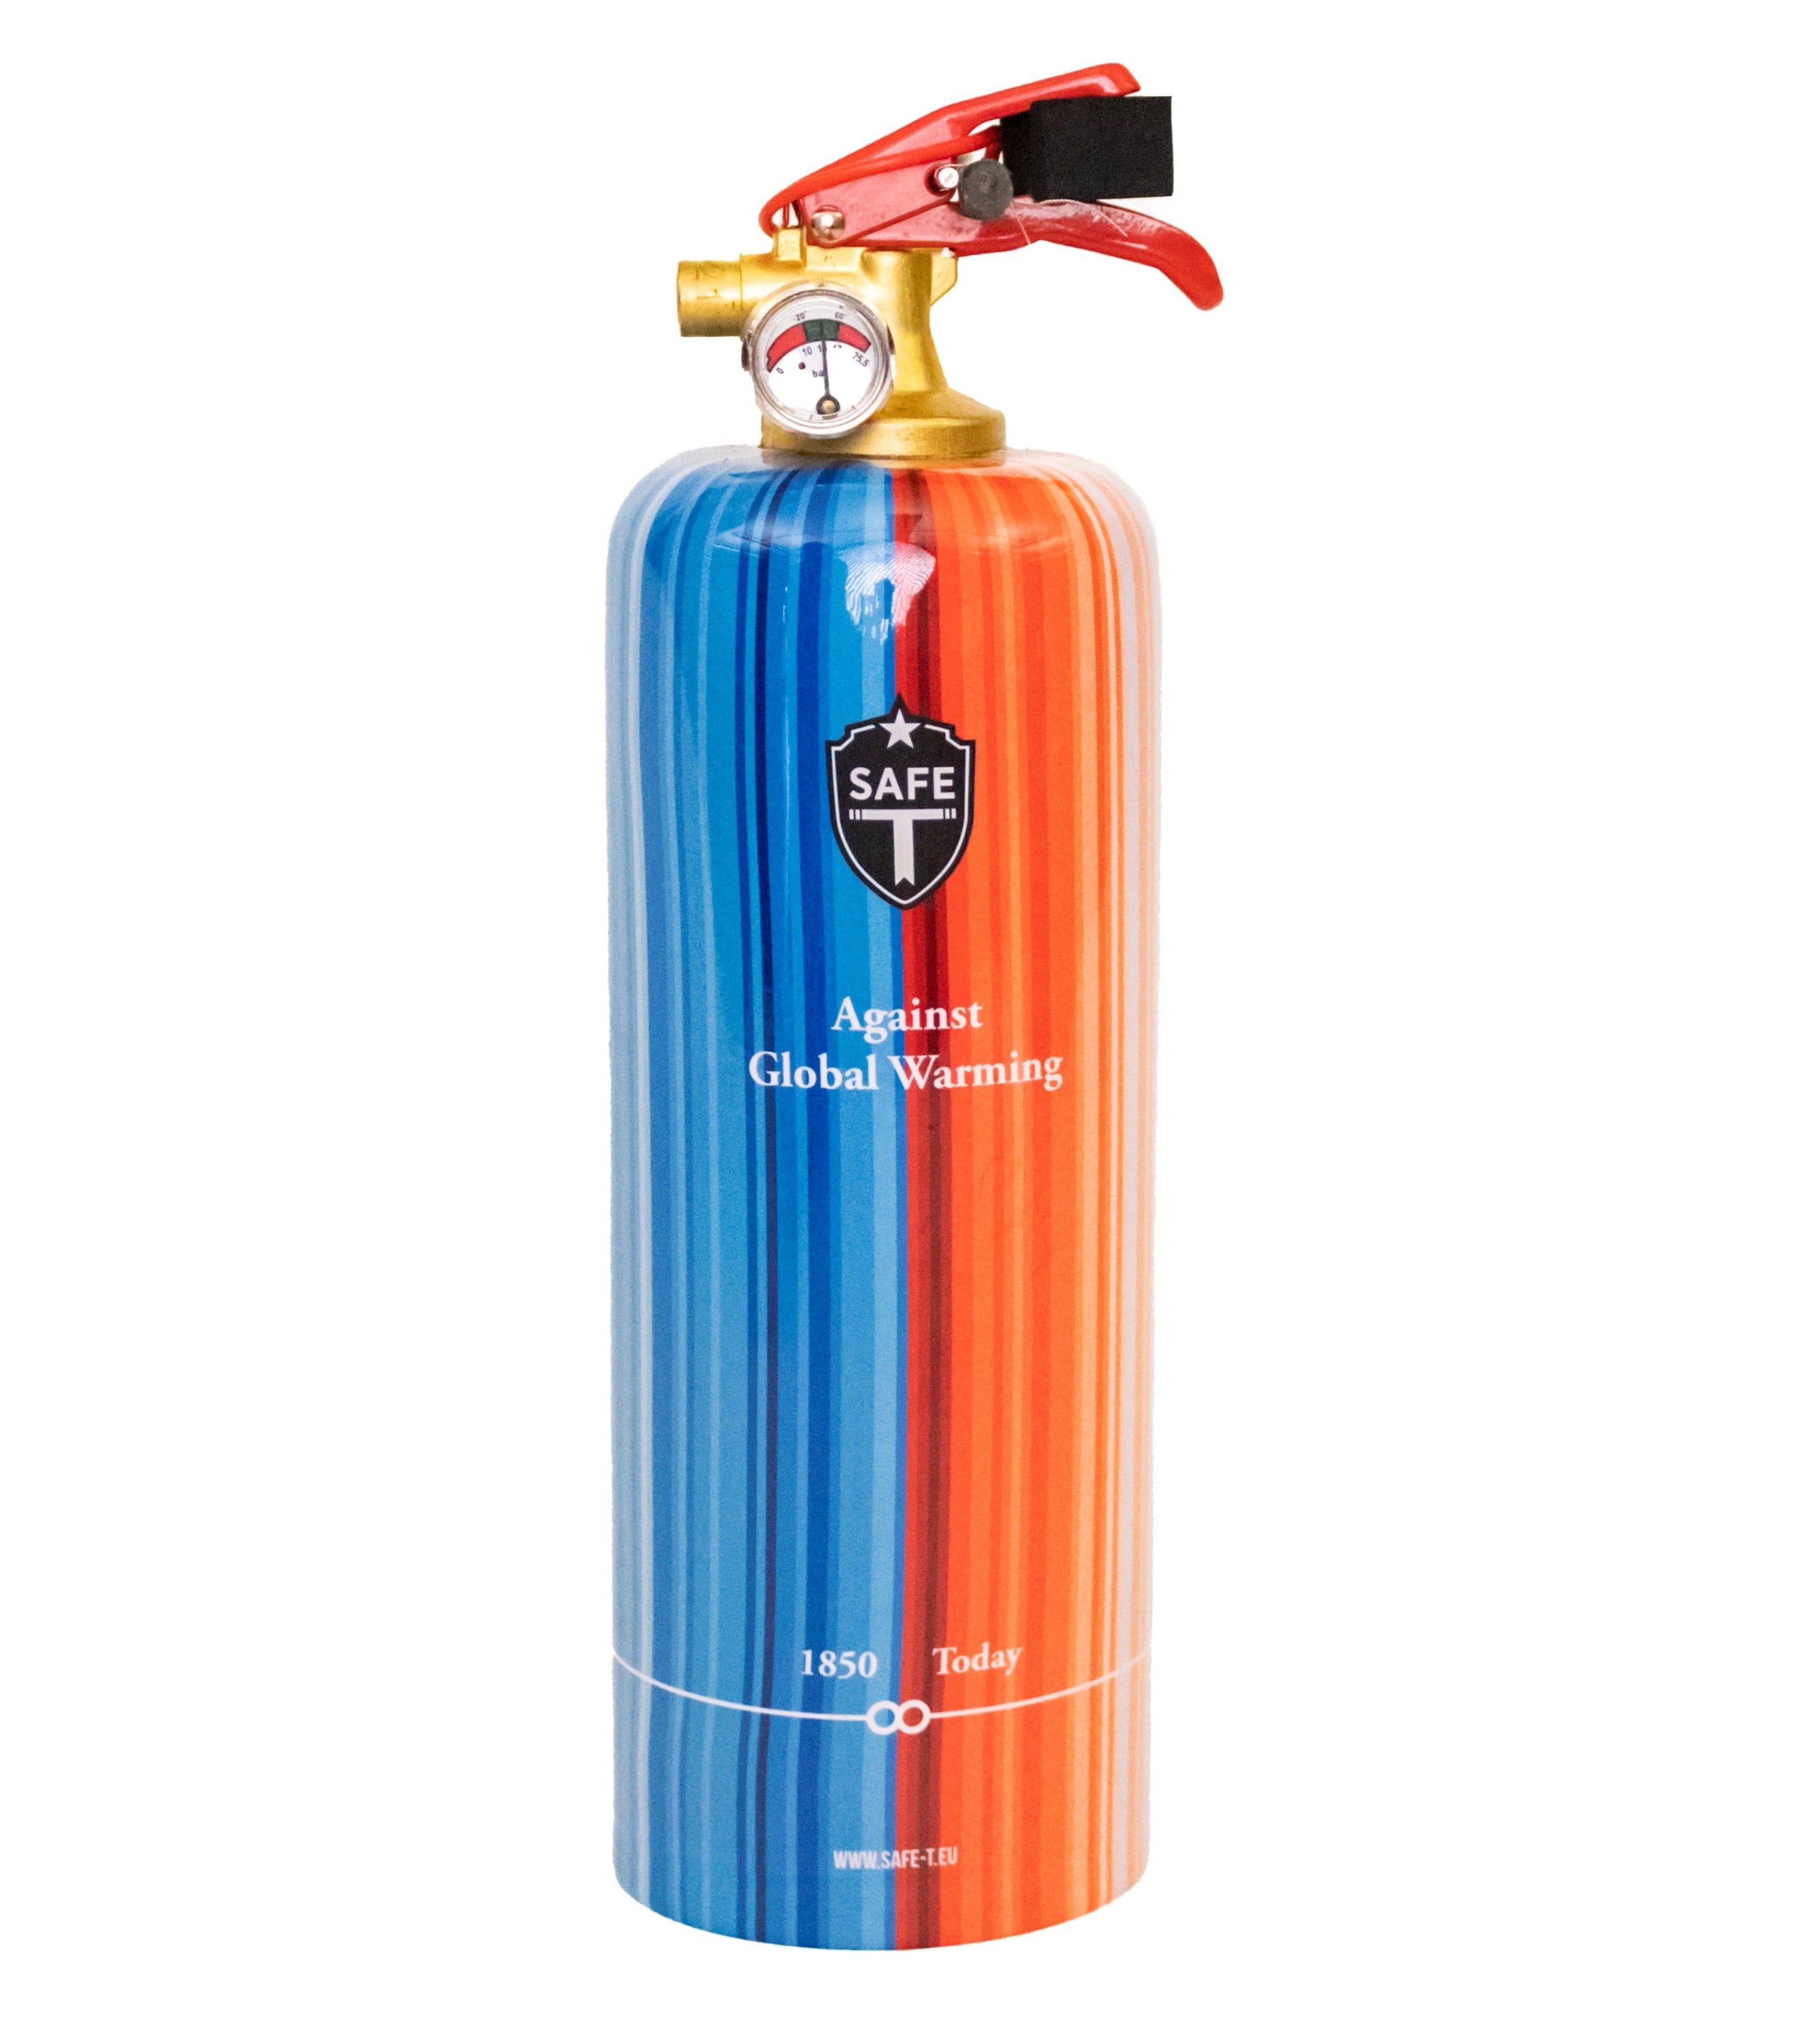 T-Safe Against Global Warming Fire Extinguisher